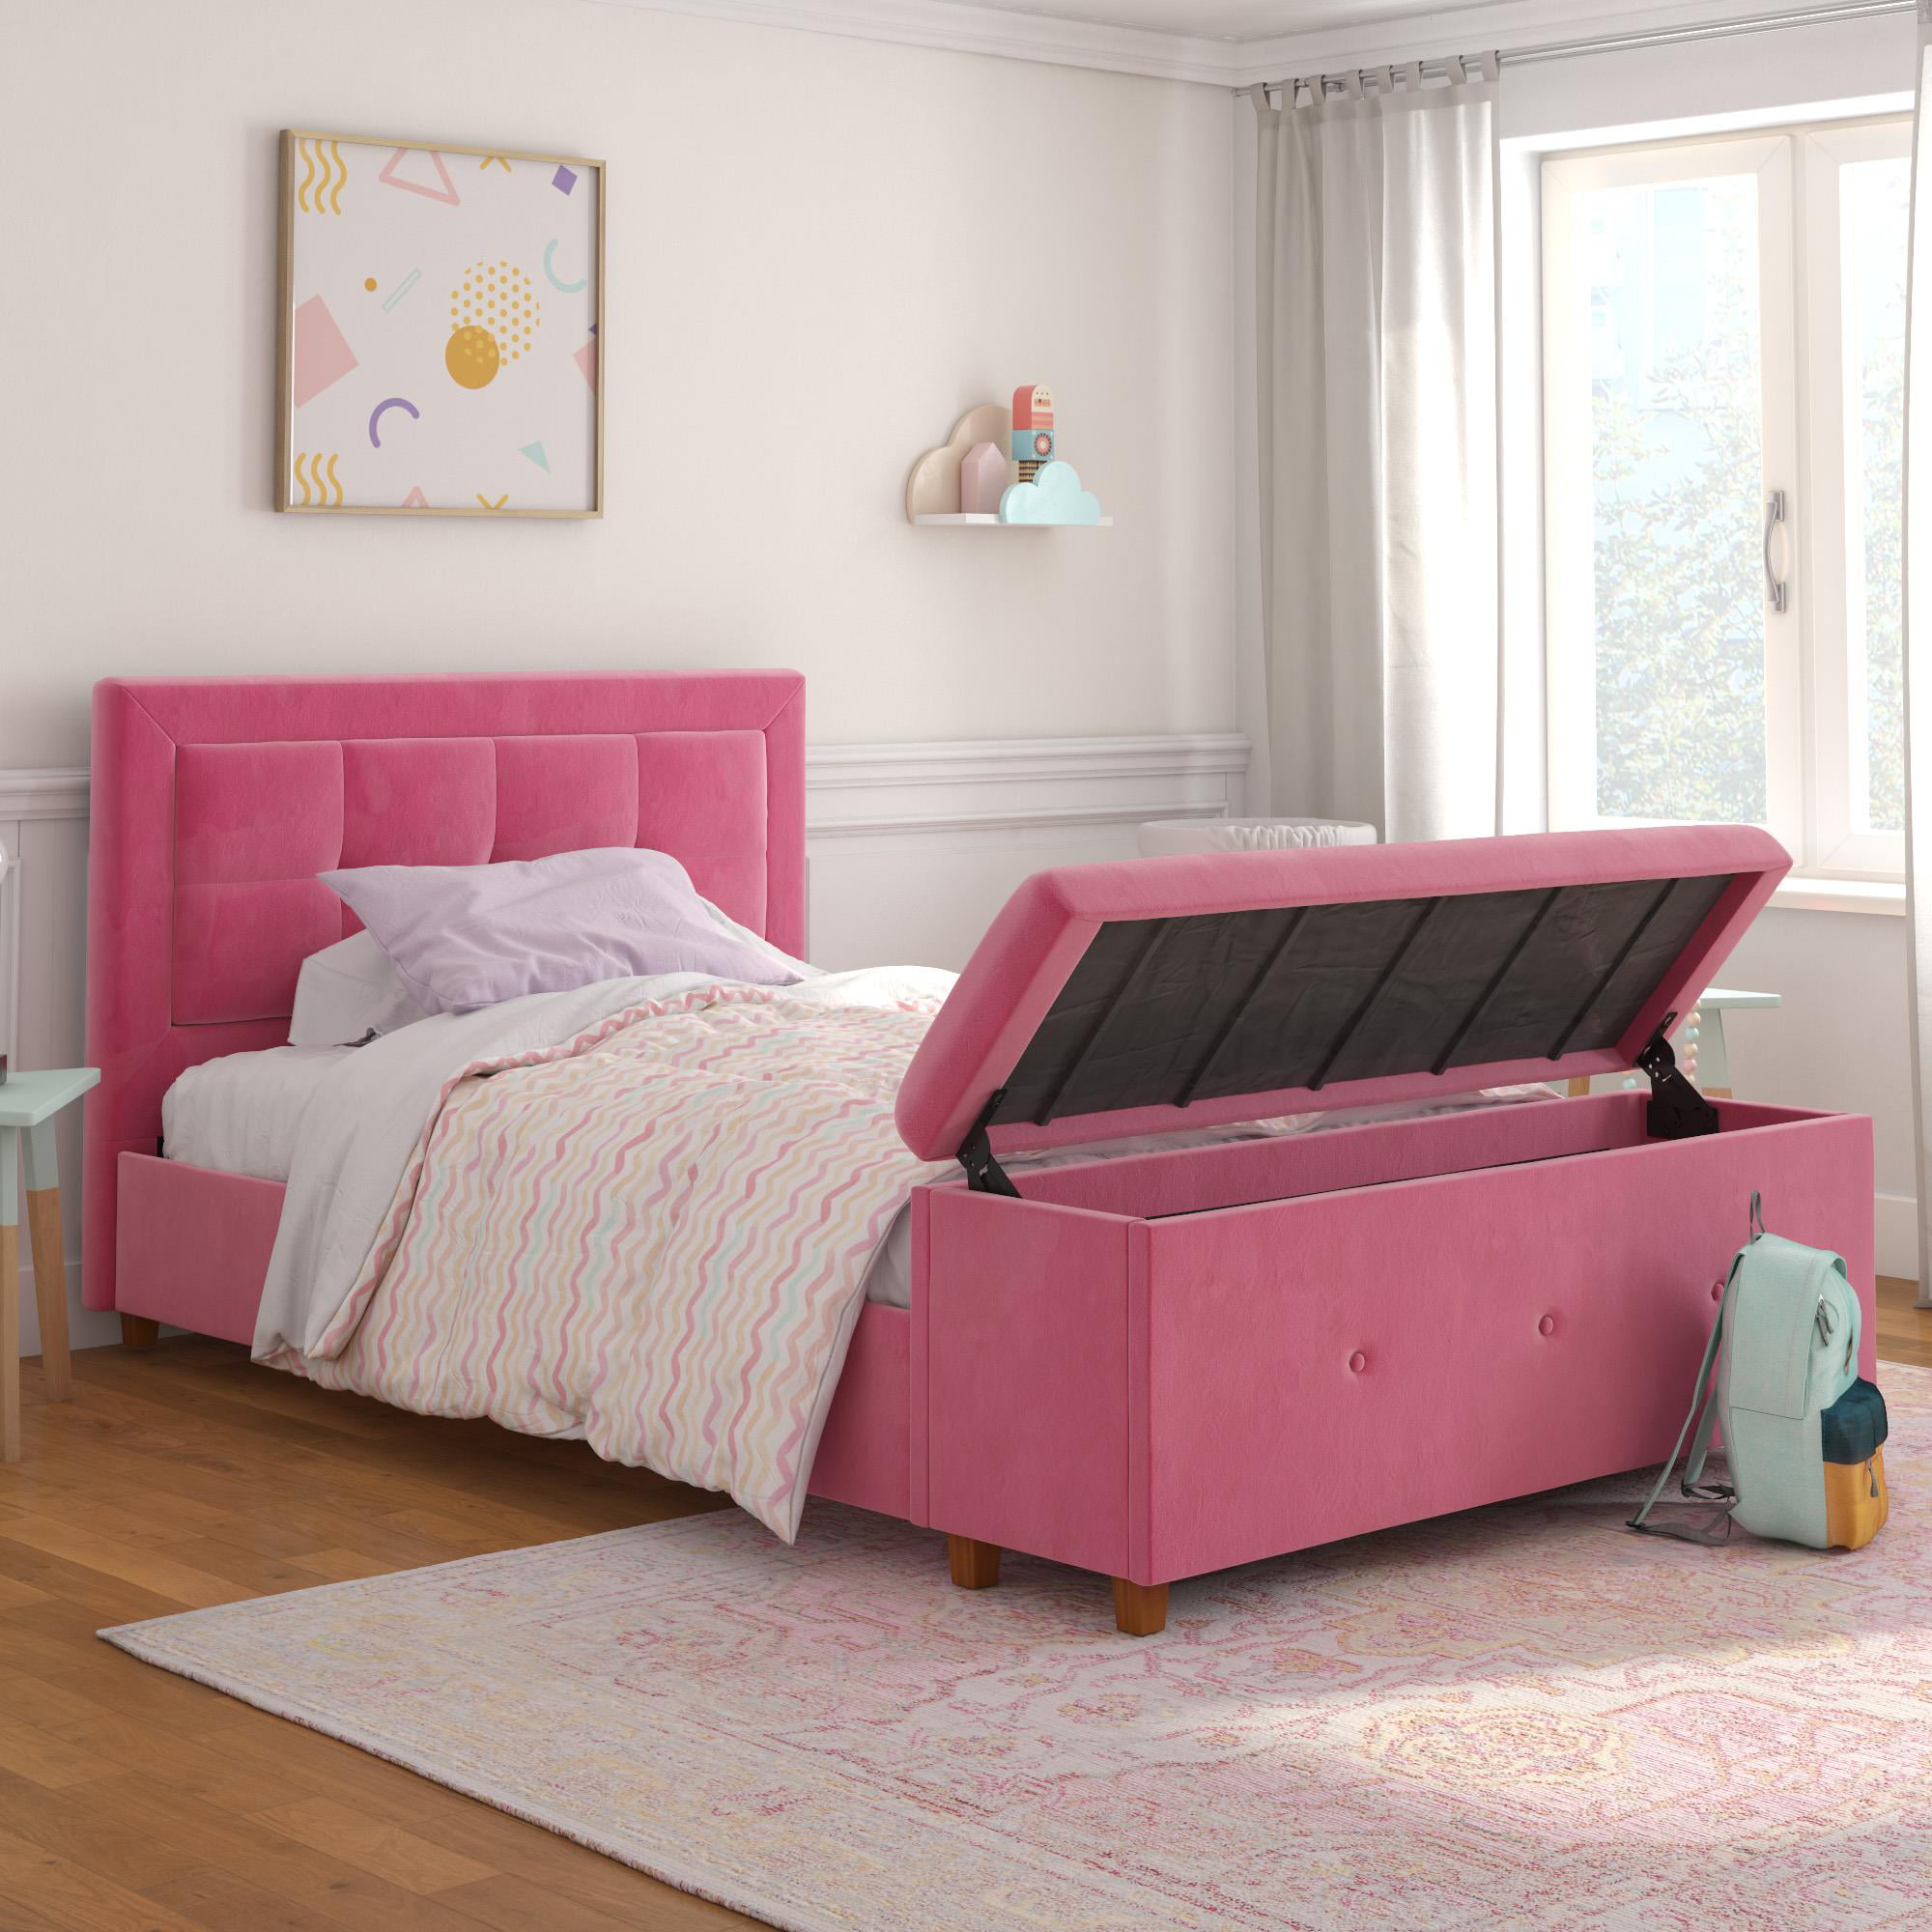 Dhp Drew Upholstered Bed With Storage Chest Full Size Pink Velvet